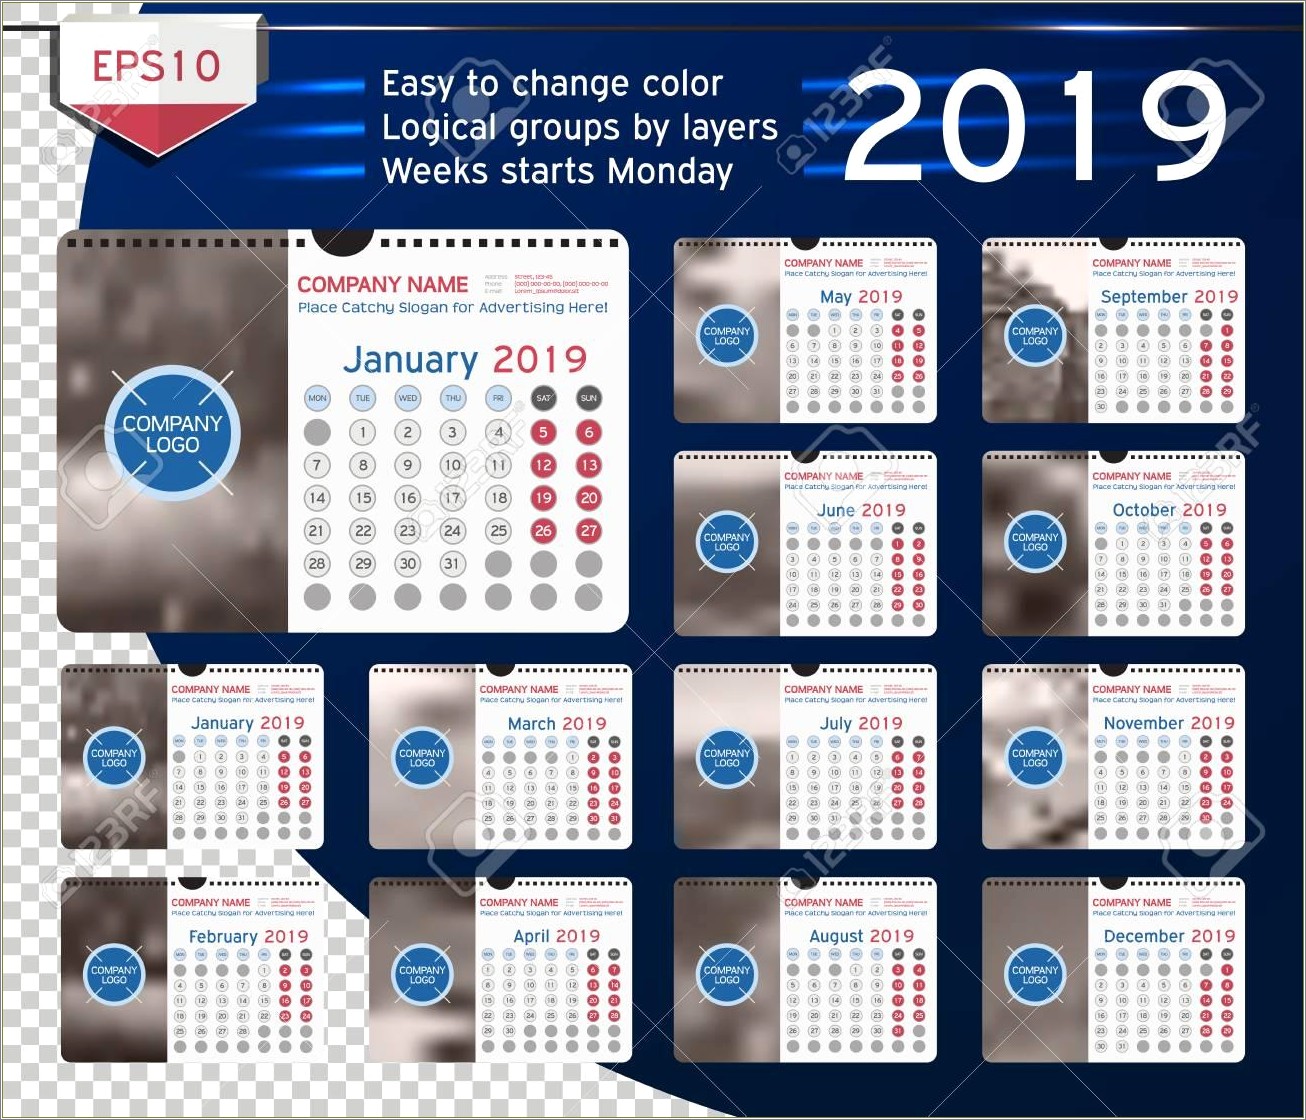 Blank Monthly Calendar Template 2019 Portrait Free